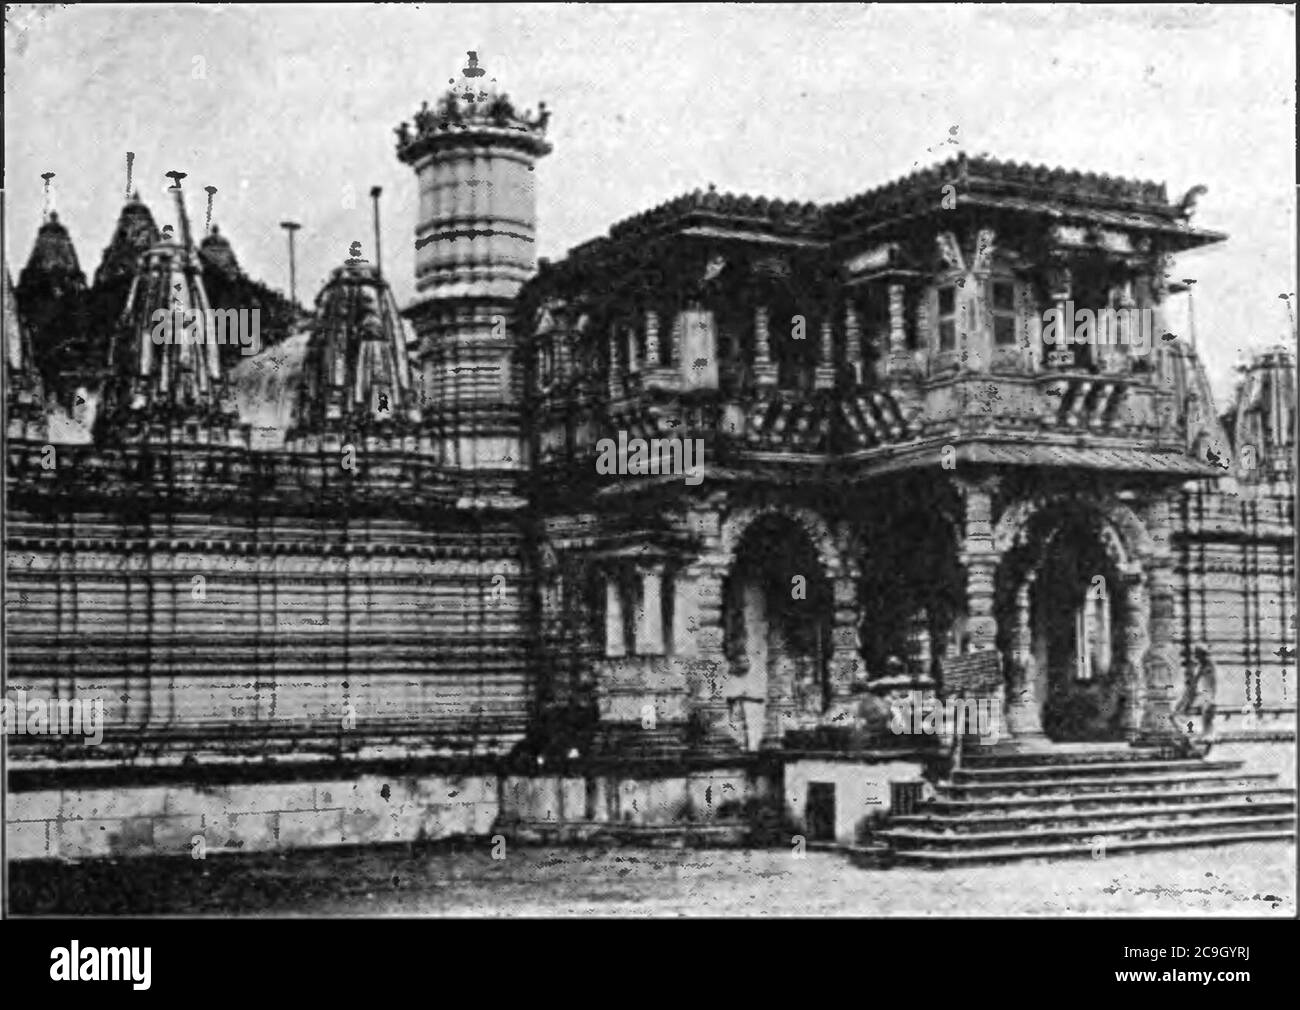 Jain Tempel in Ahmadabad - Seite 327 - Geschichte Indiens Band 1 (1906). Stockfoto